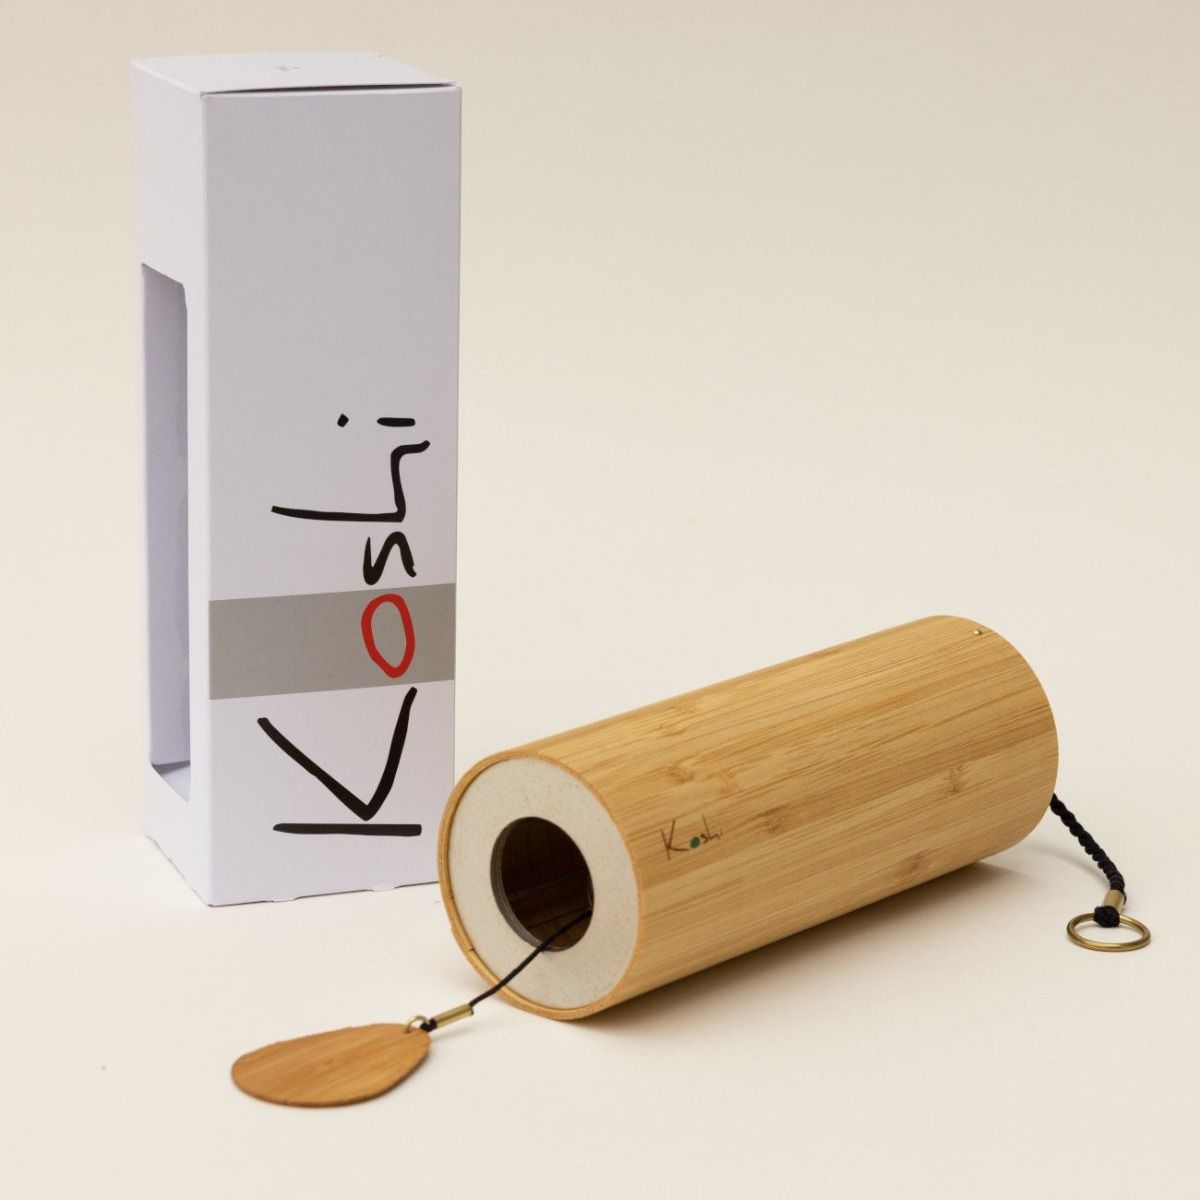 Koshi Chimes - Healing Bamboo Chimes